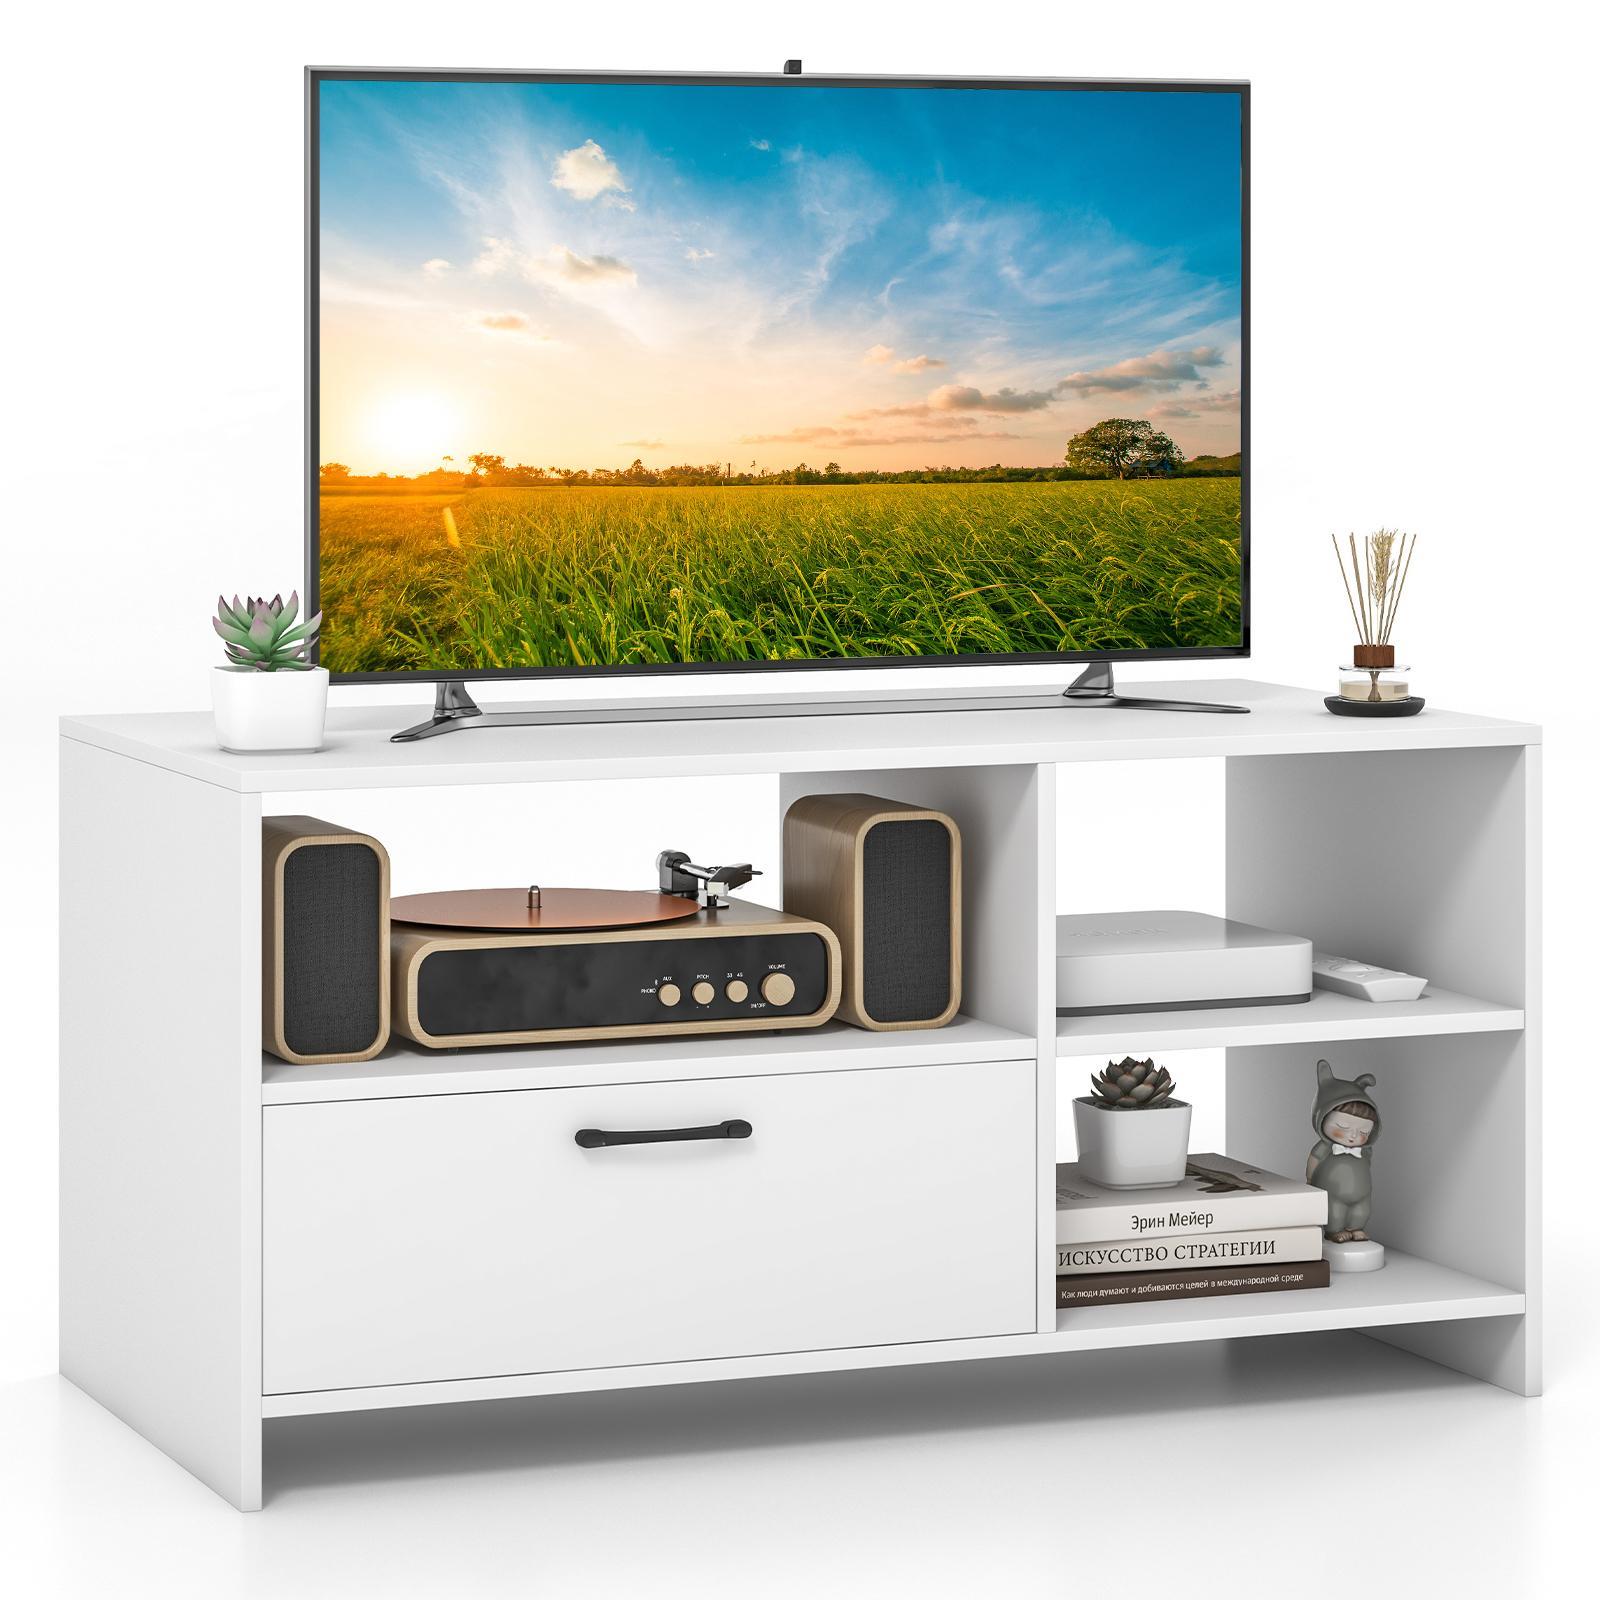 Giantex Wooden TV Stand Entertainment Unit TV Cabinet w/3 Open Shelves & Drawer, White